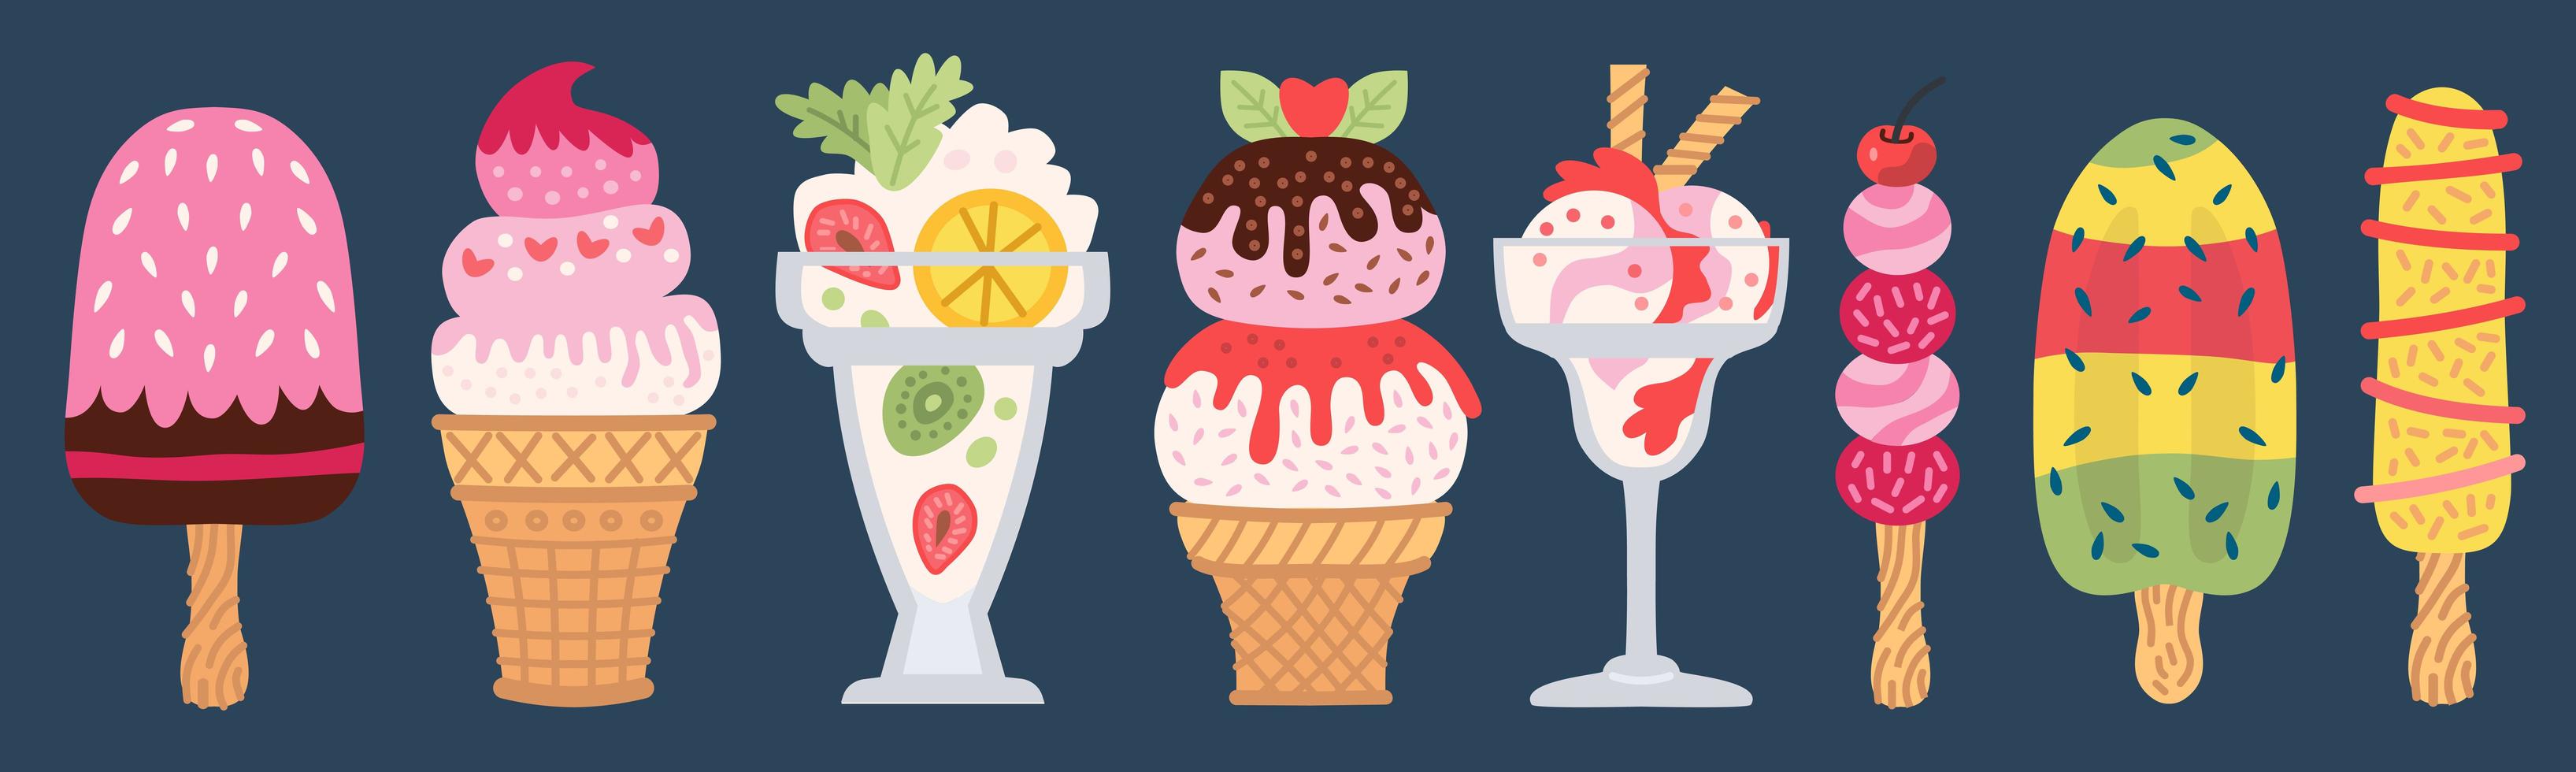 conjunto de diferentes tipos de sorvete vetor